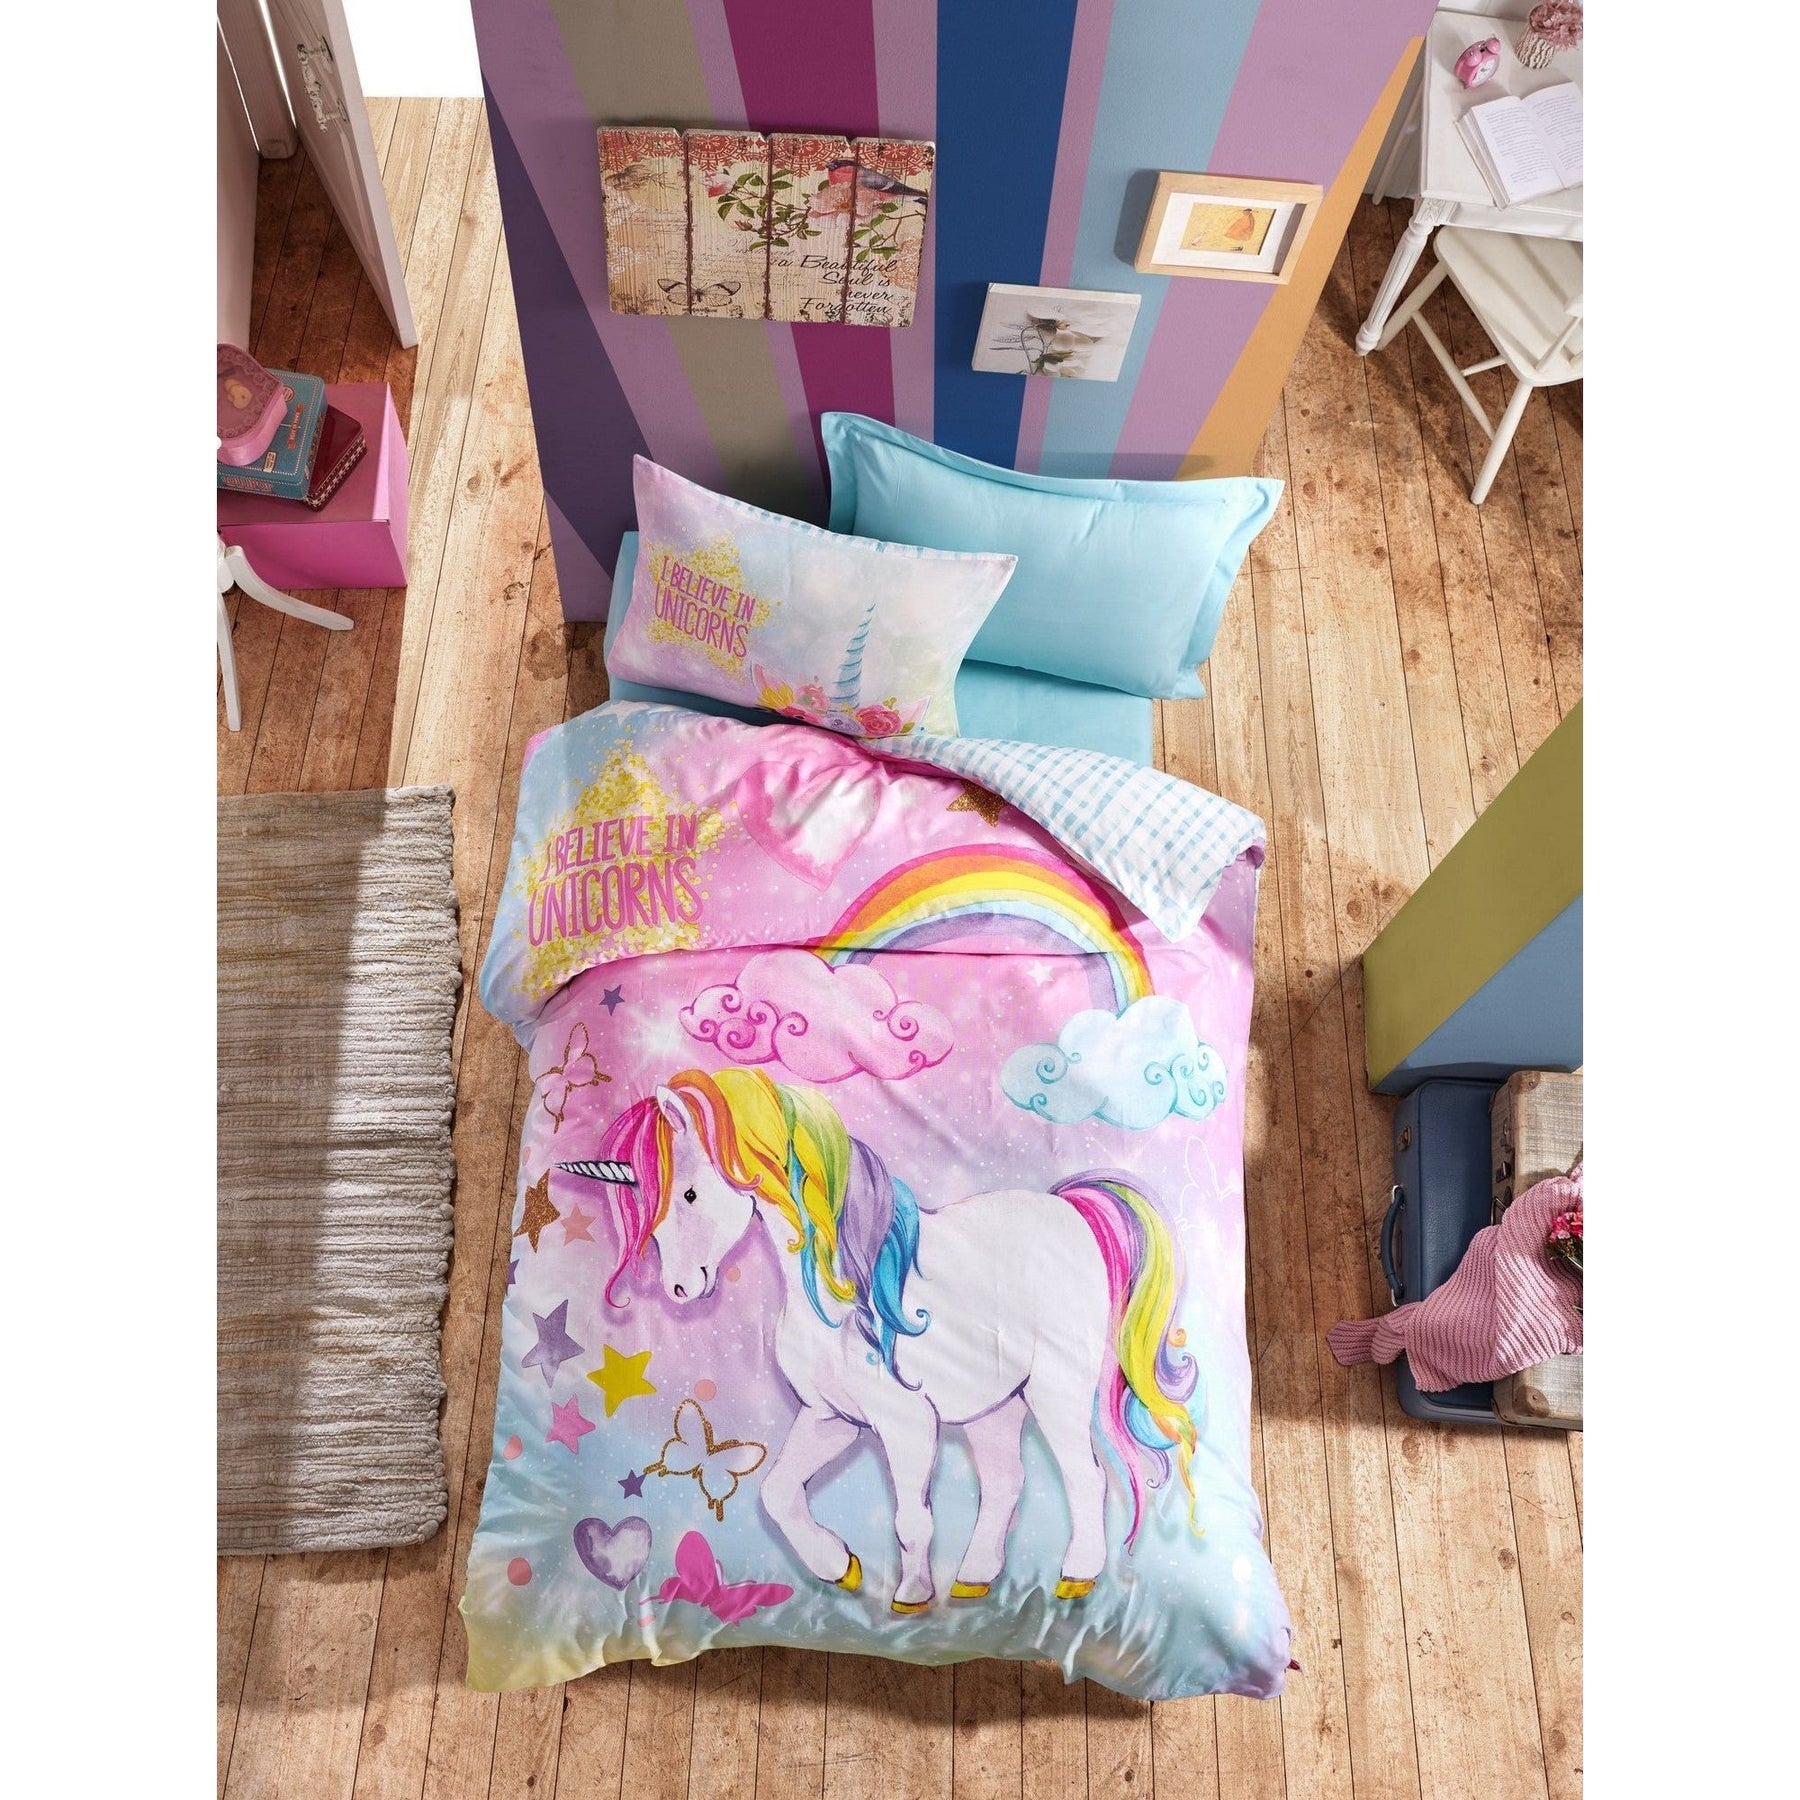 Set lenjerie pat pentru copii Dream, bumbac ranforce 100%, albastru/roz, 160 x 220 cm + 1 fata de perna